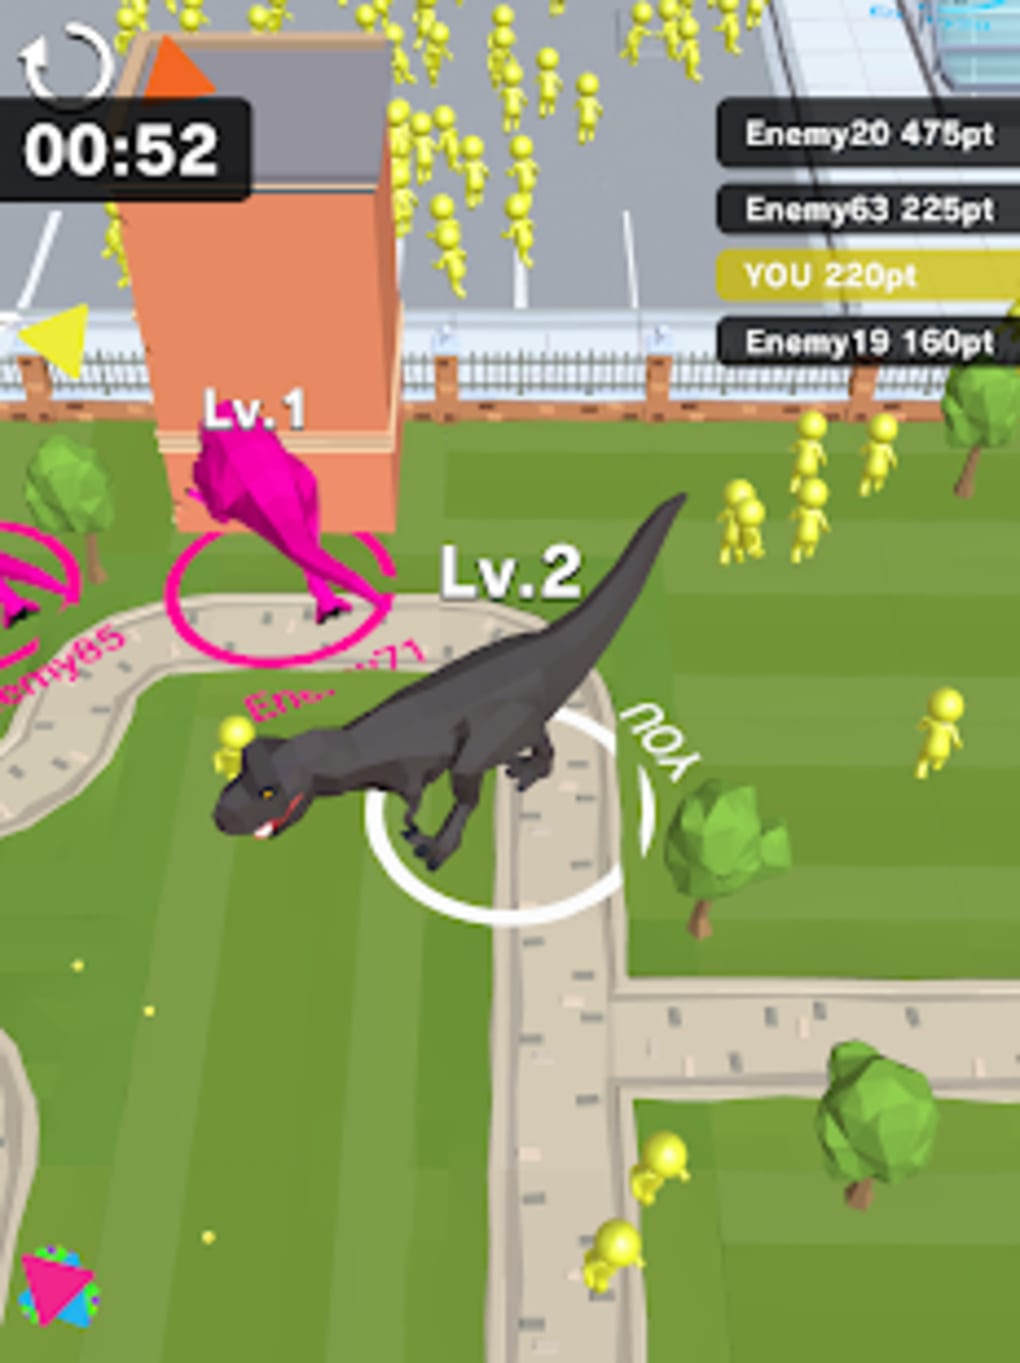 Baixar Dinosaur Rampage 4.4 Android - Download APK Grátis